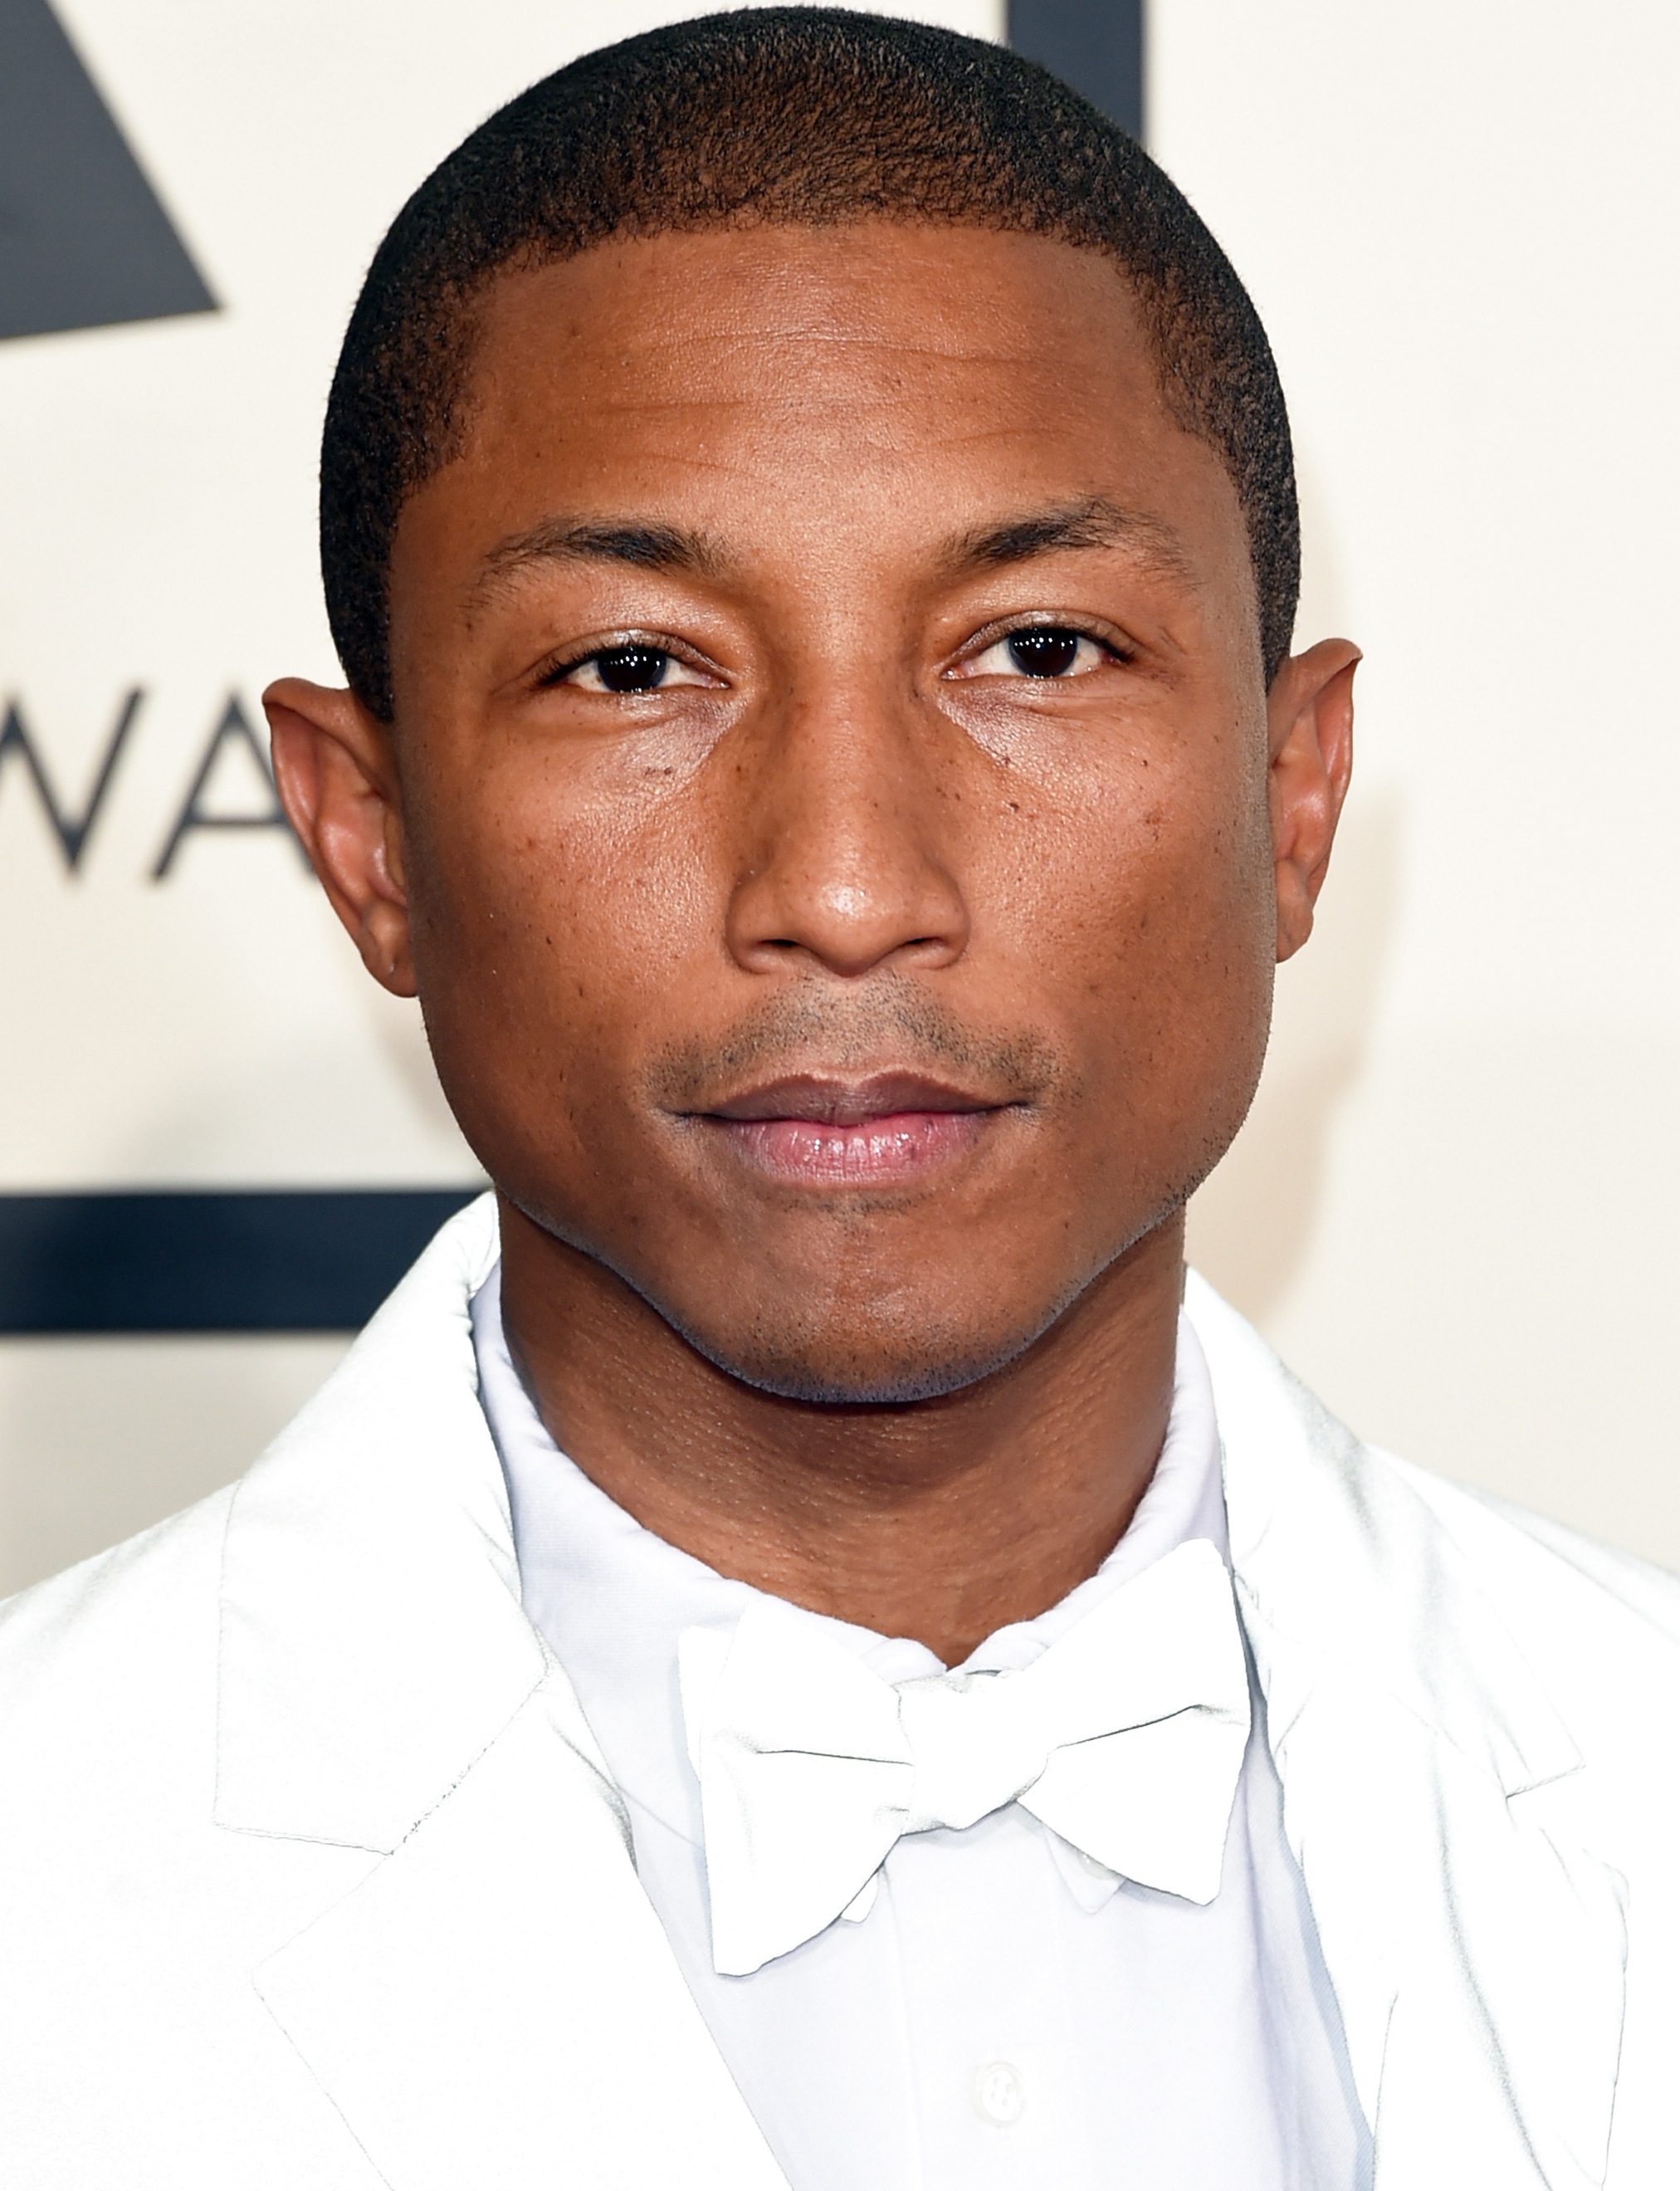 How tall is Pharrell Williams?